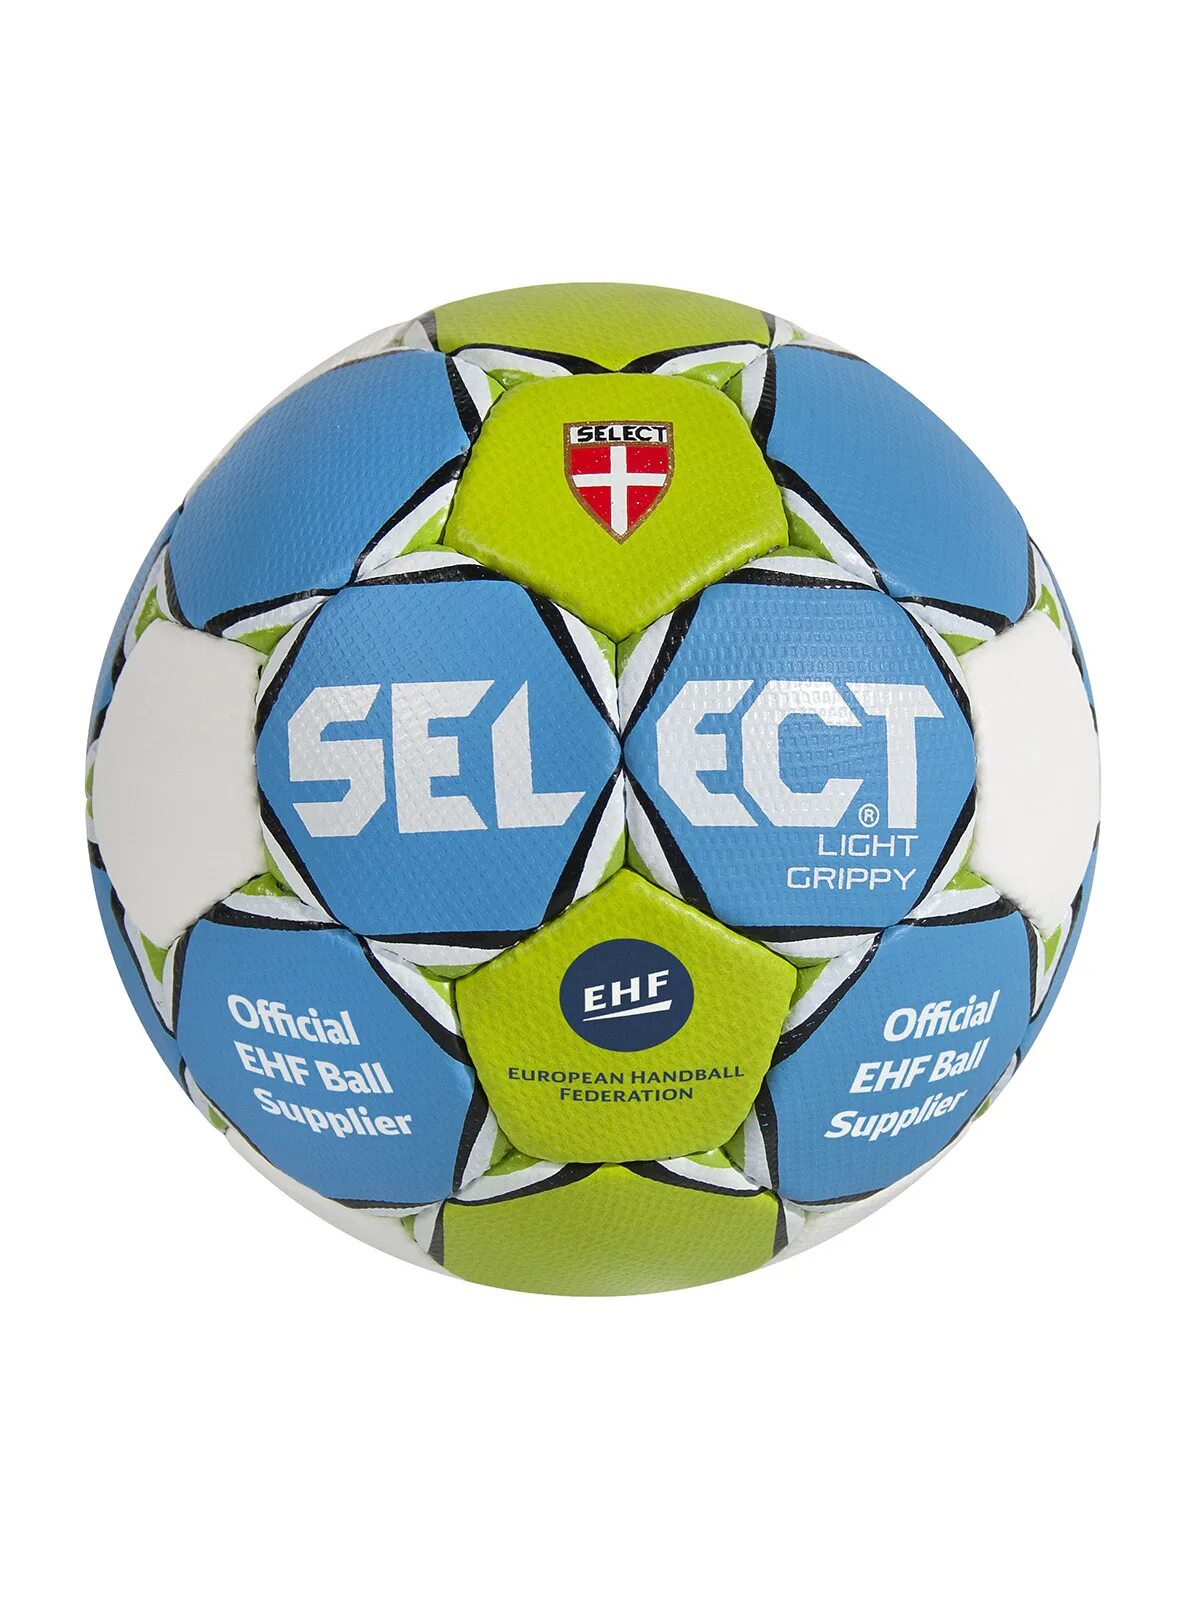 Селект. Мяч Селект гандбольный 1. Мяч гандбольный select размер 1. Мяч гандбольный Torres h30051. Мяч для гандбола select размер 1.